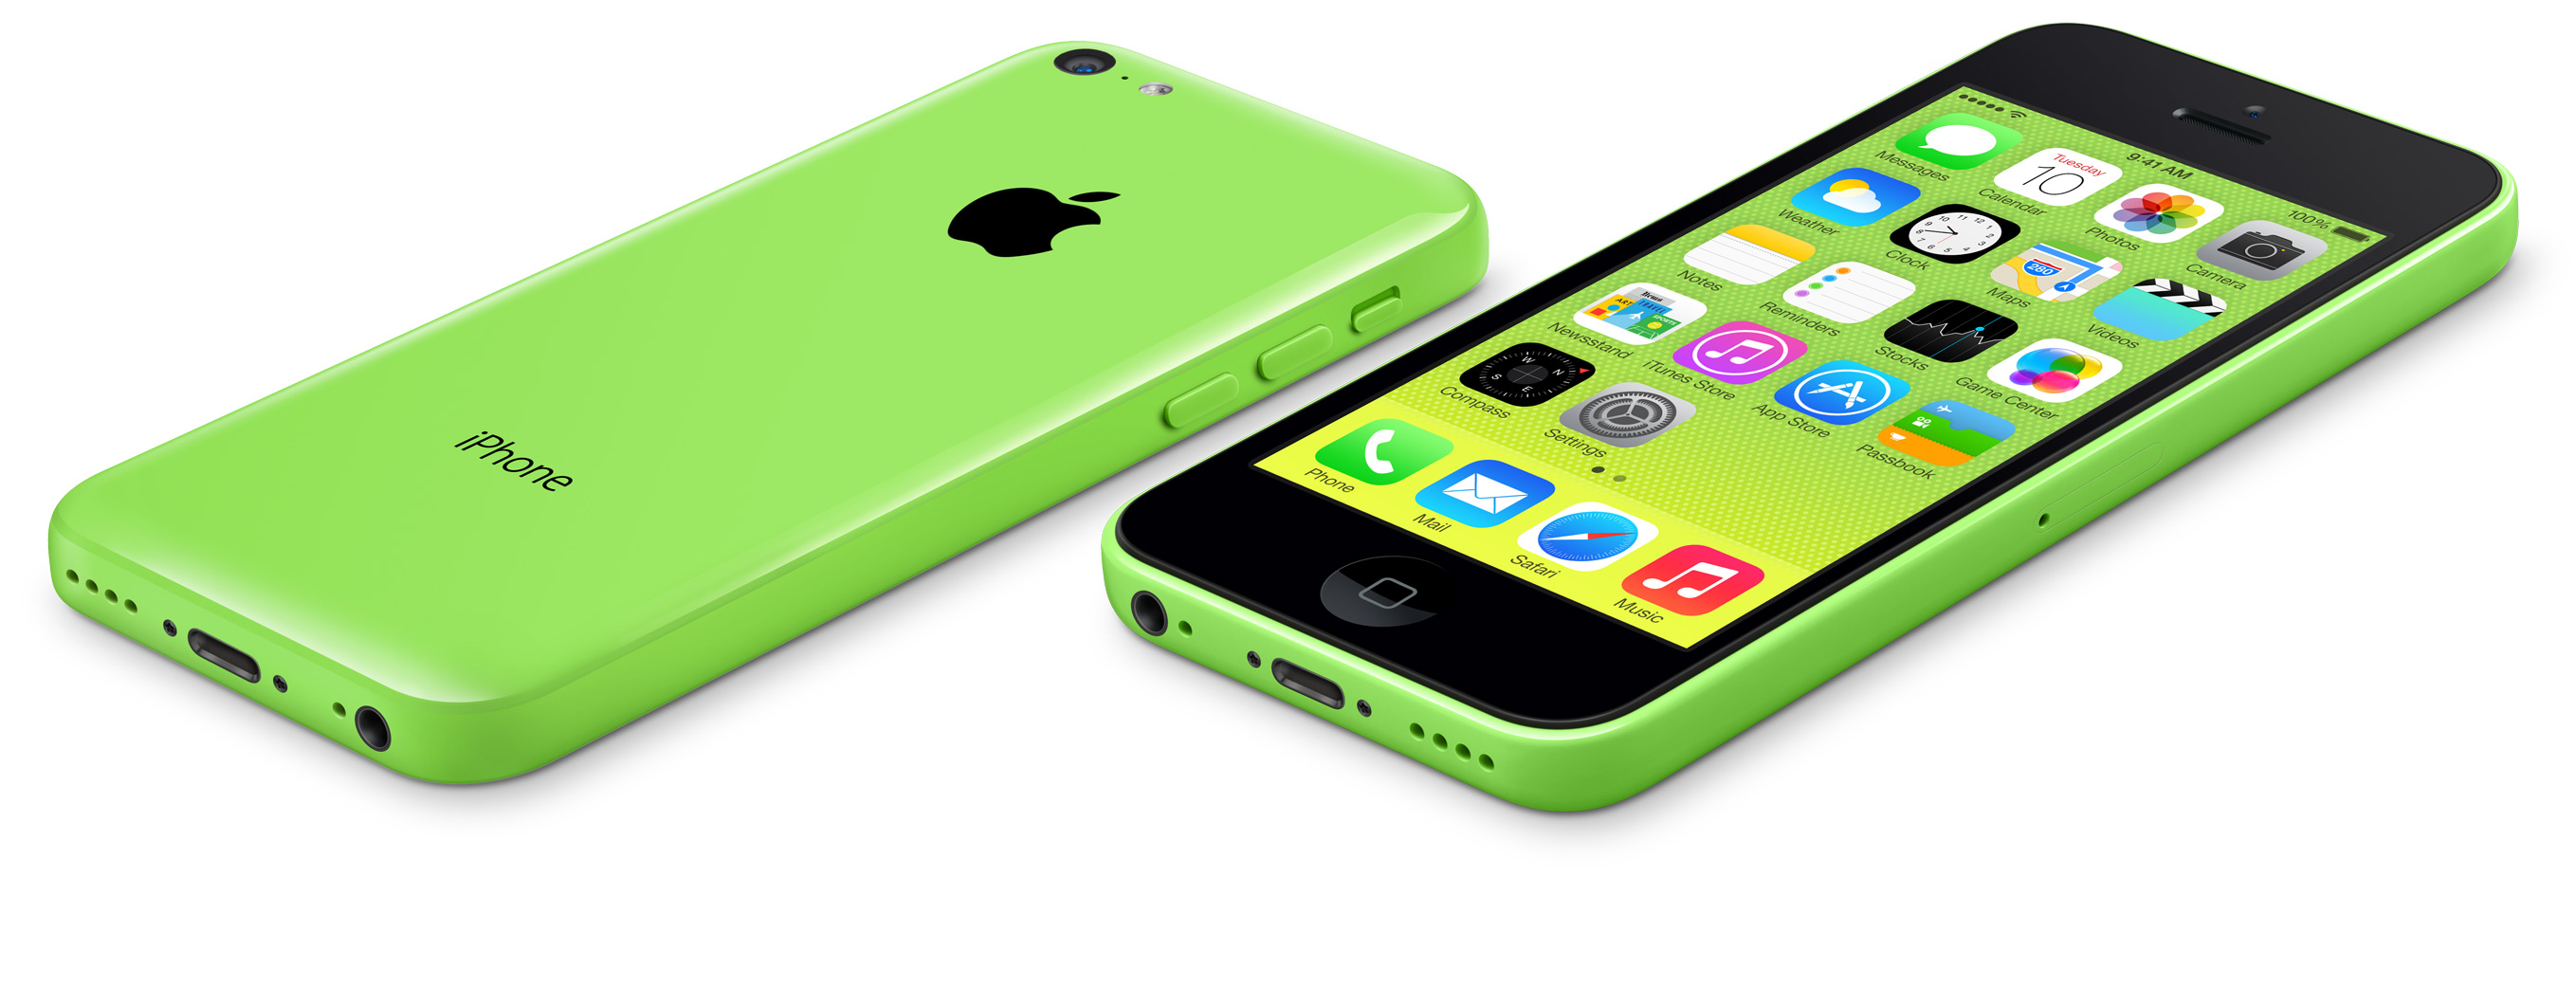 Apple iPhone 5c 16GB Smartphone - Cricket Wireless - Green - Mint ...